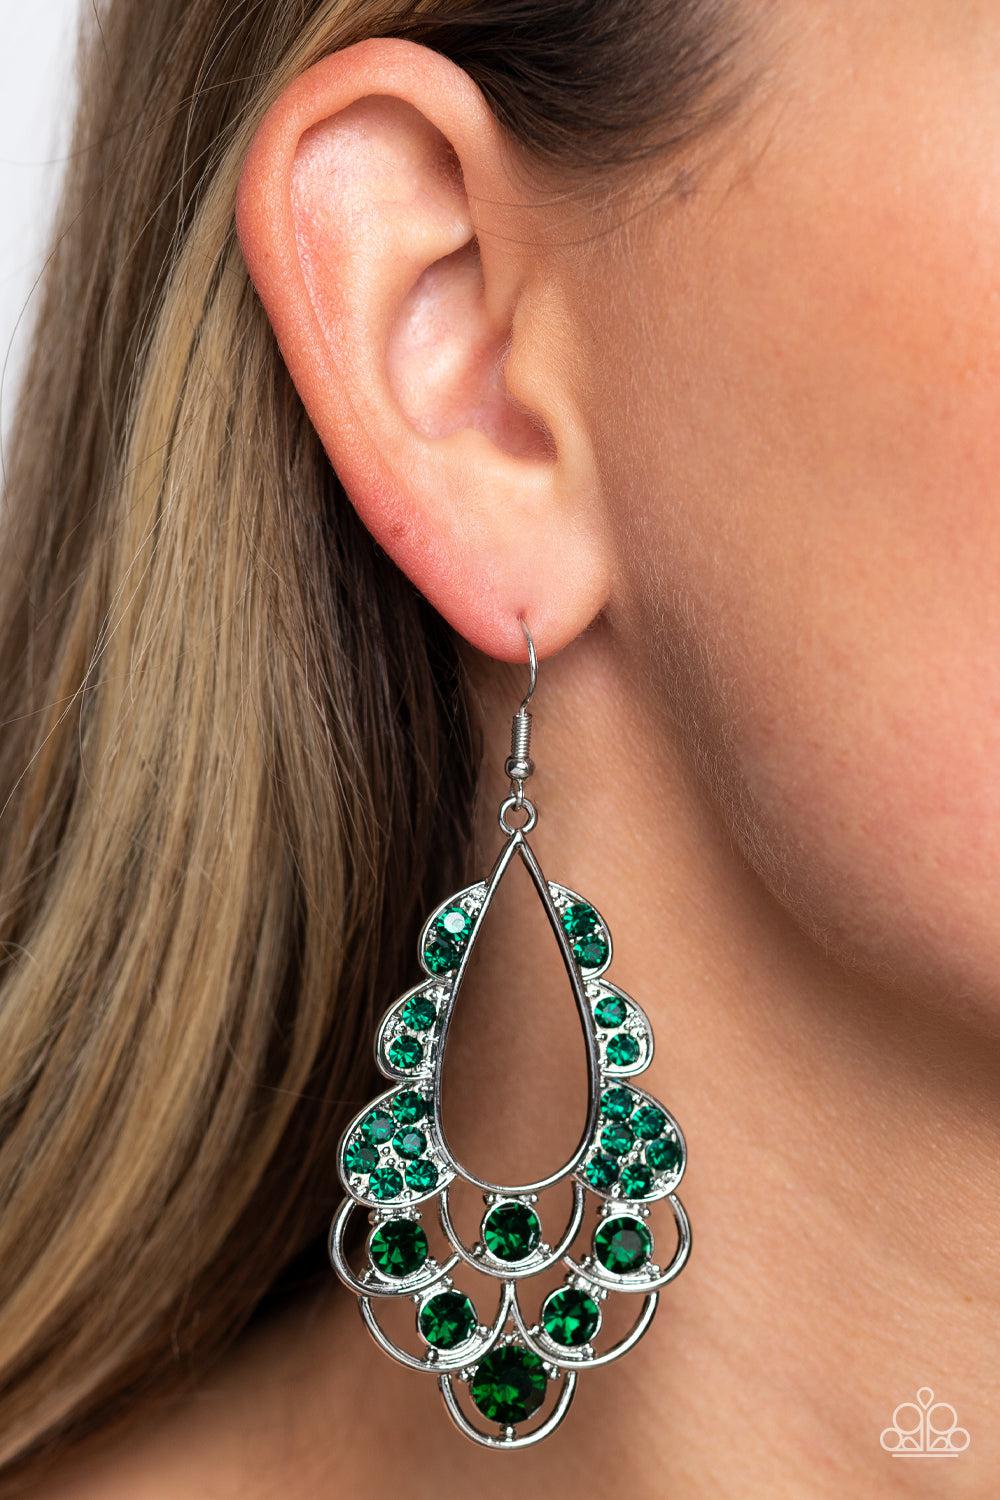 Majestic Masquerade Green Rhinestone Earrings - Paparazzi Accessories- lightbox - CarasShop.com - $5 Jewelry by Cara Jewels